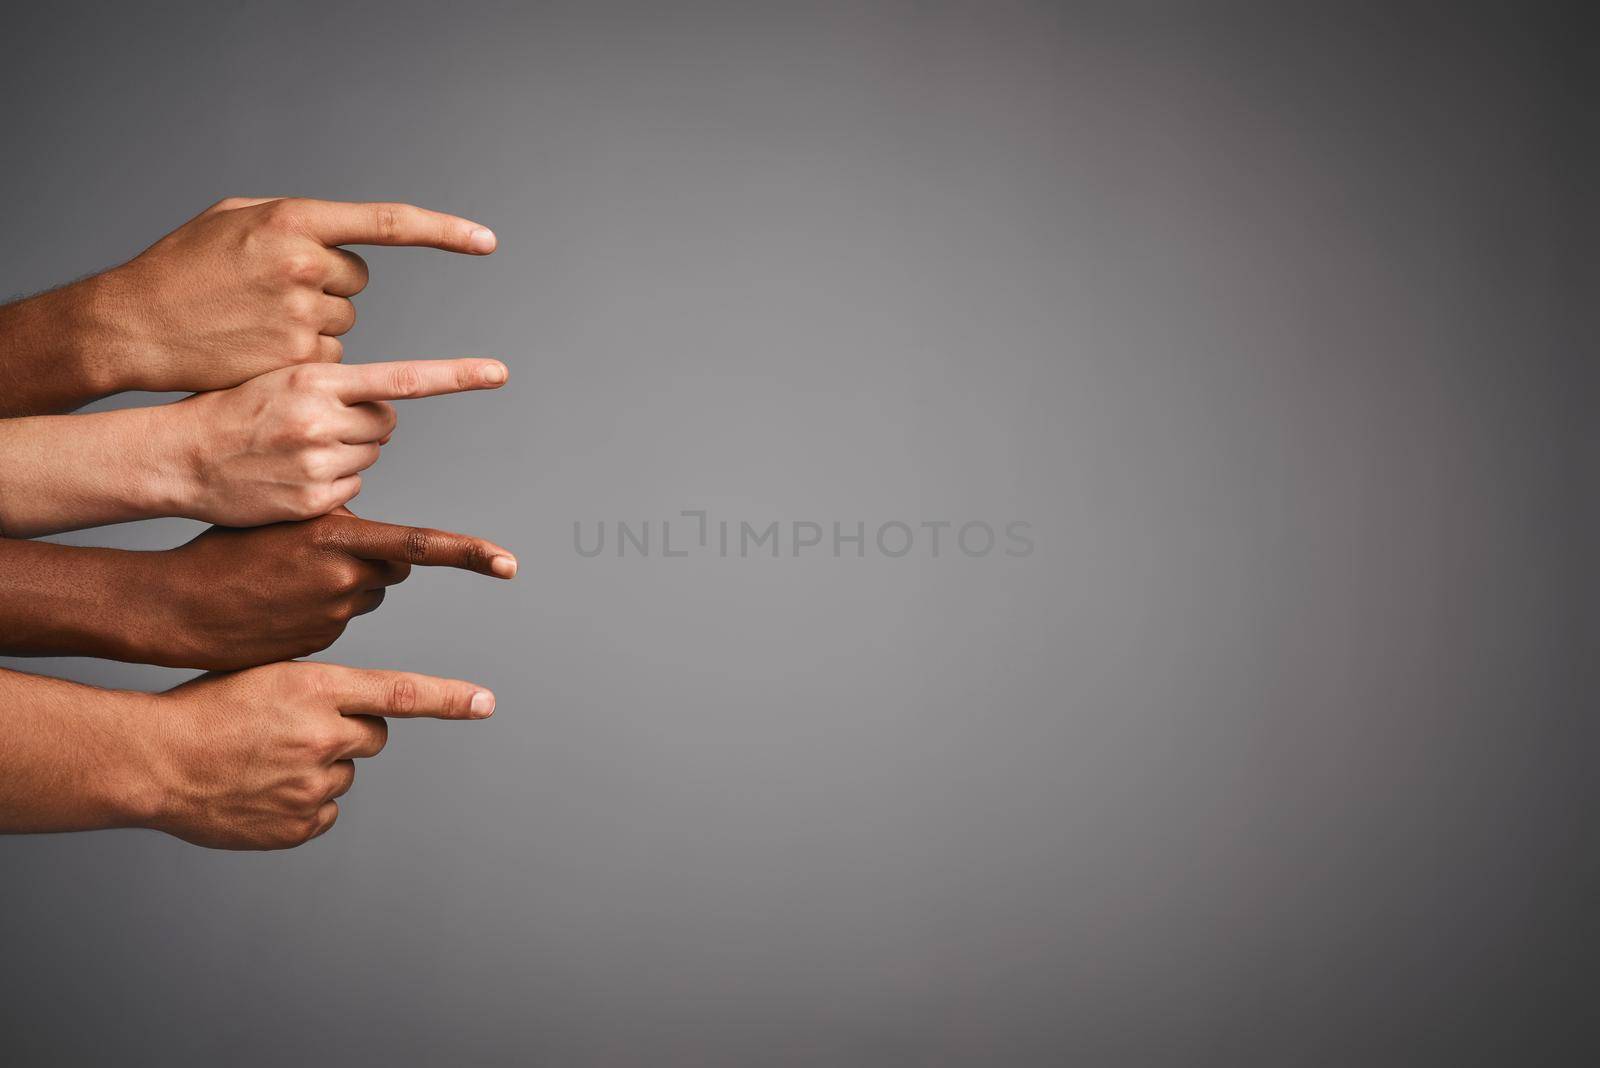 Studio shot of unidentifiable hands pointing sideways towards blank copyspace.